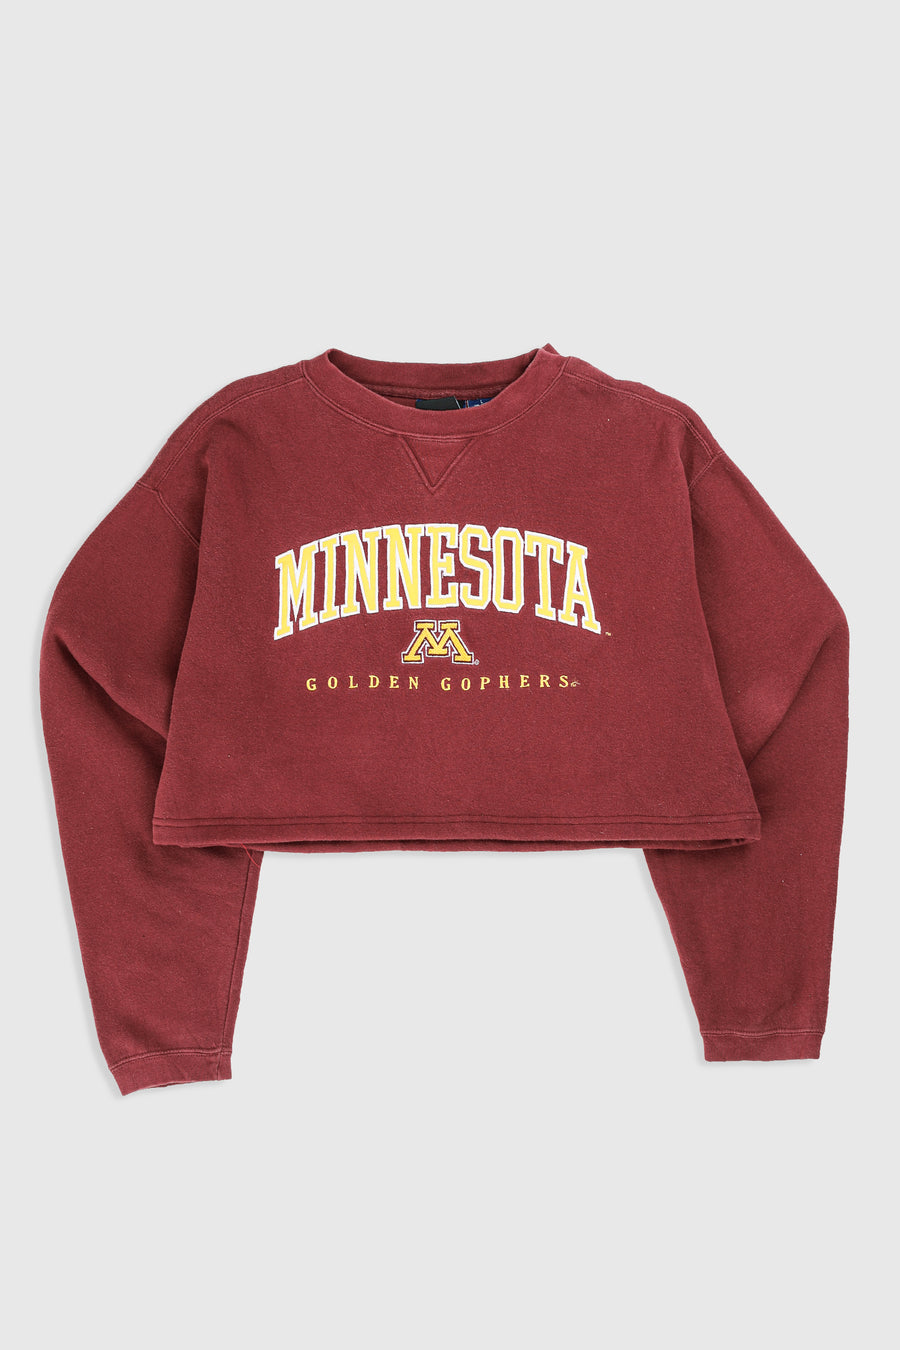 Rework Minnesota Crop Sweatshirt - XL